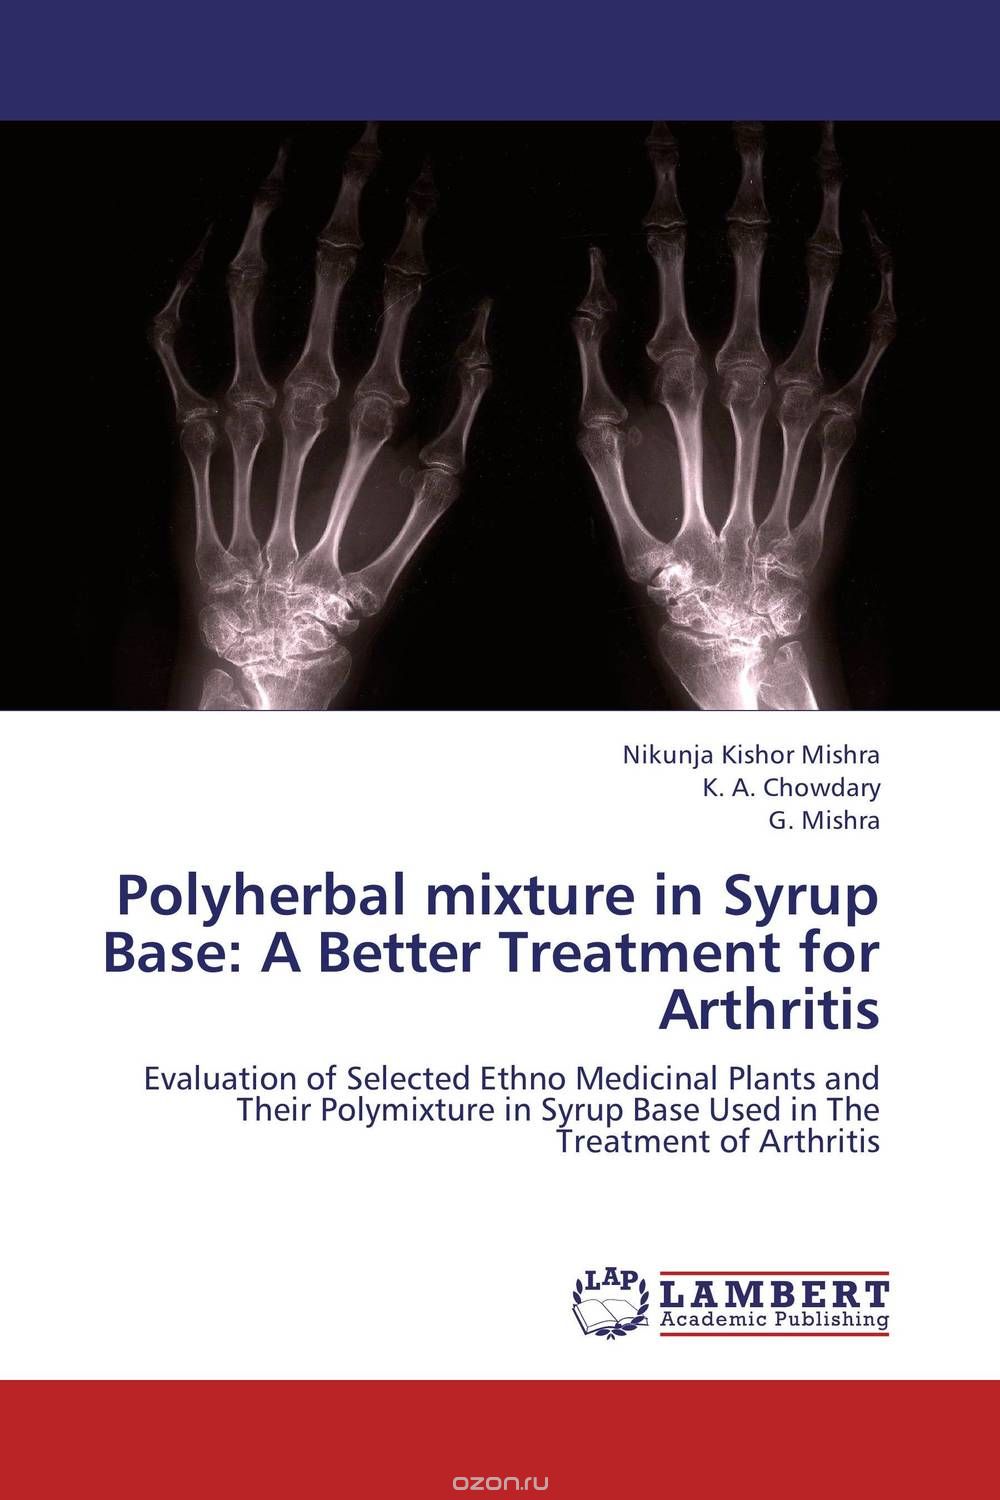 Скачать книгу "Polyherbal mixture in Syrup Base: A Better Treatment for Arthritis"